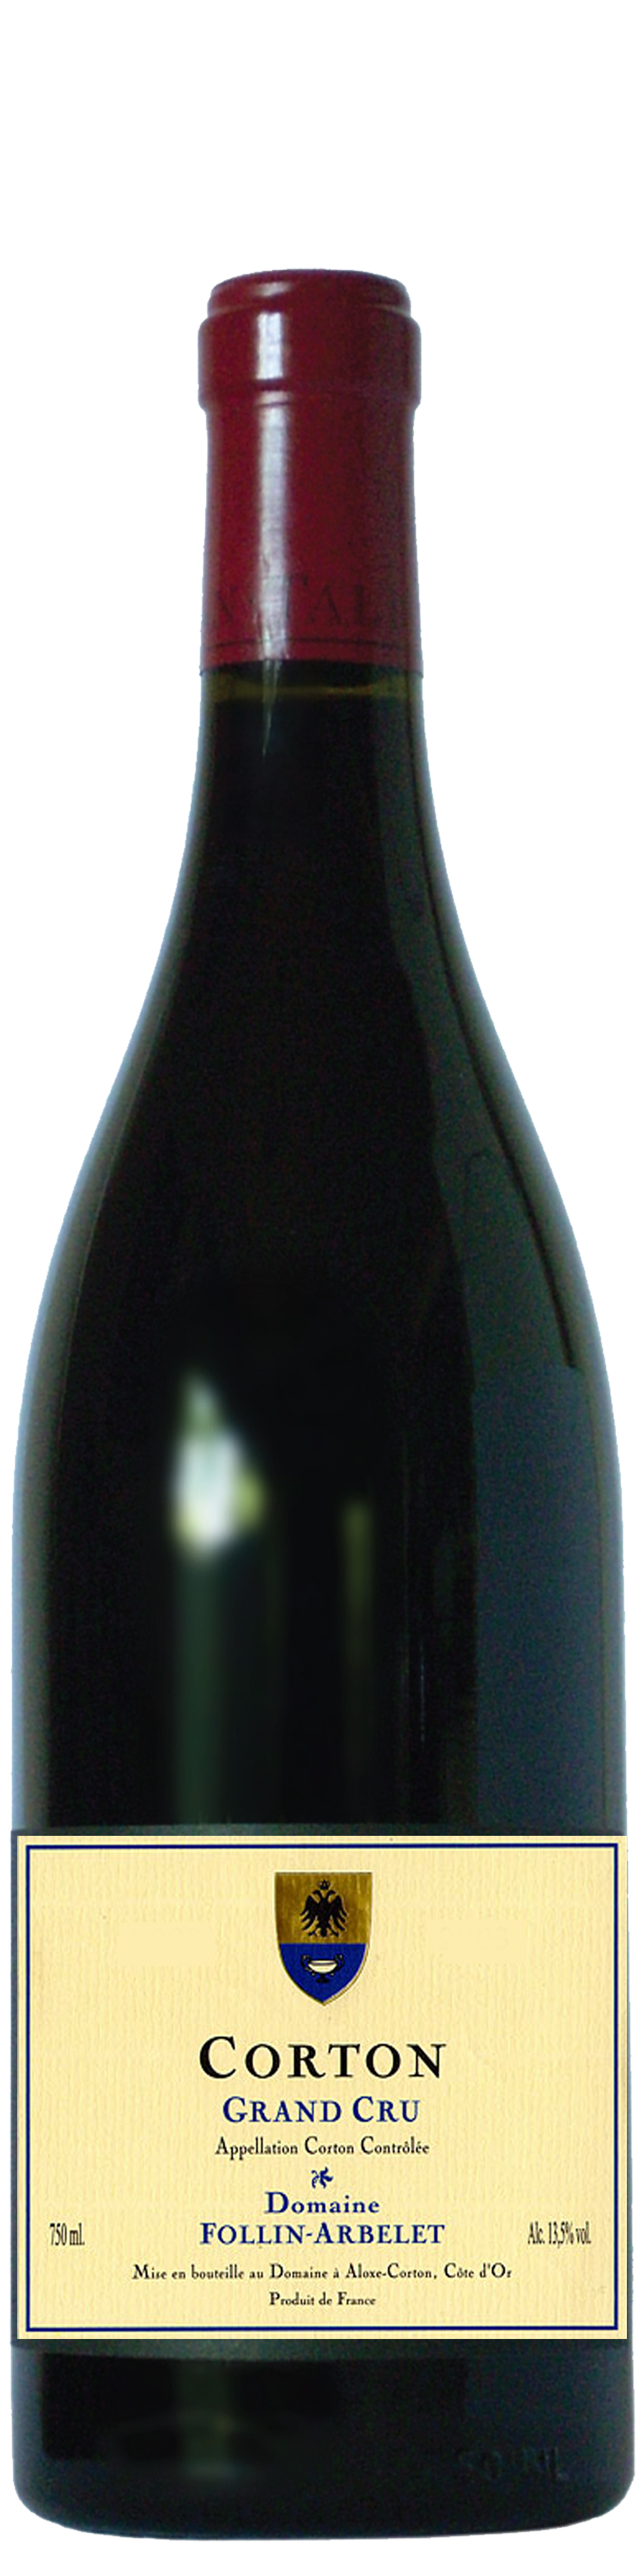 Bottle shot of 2006 Corton Grand Cru